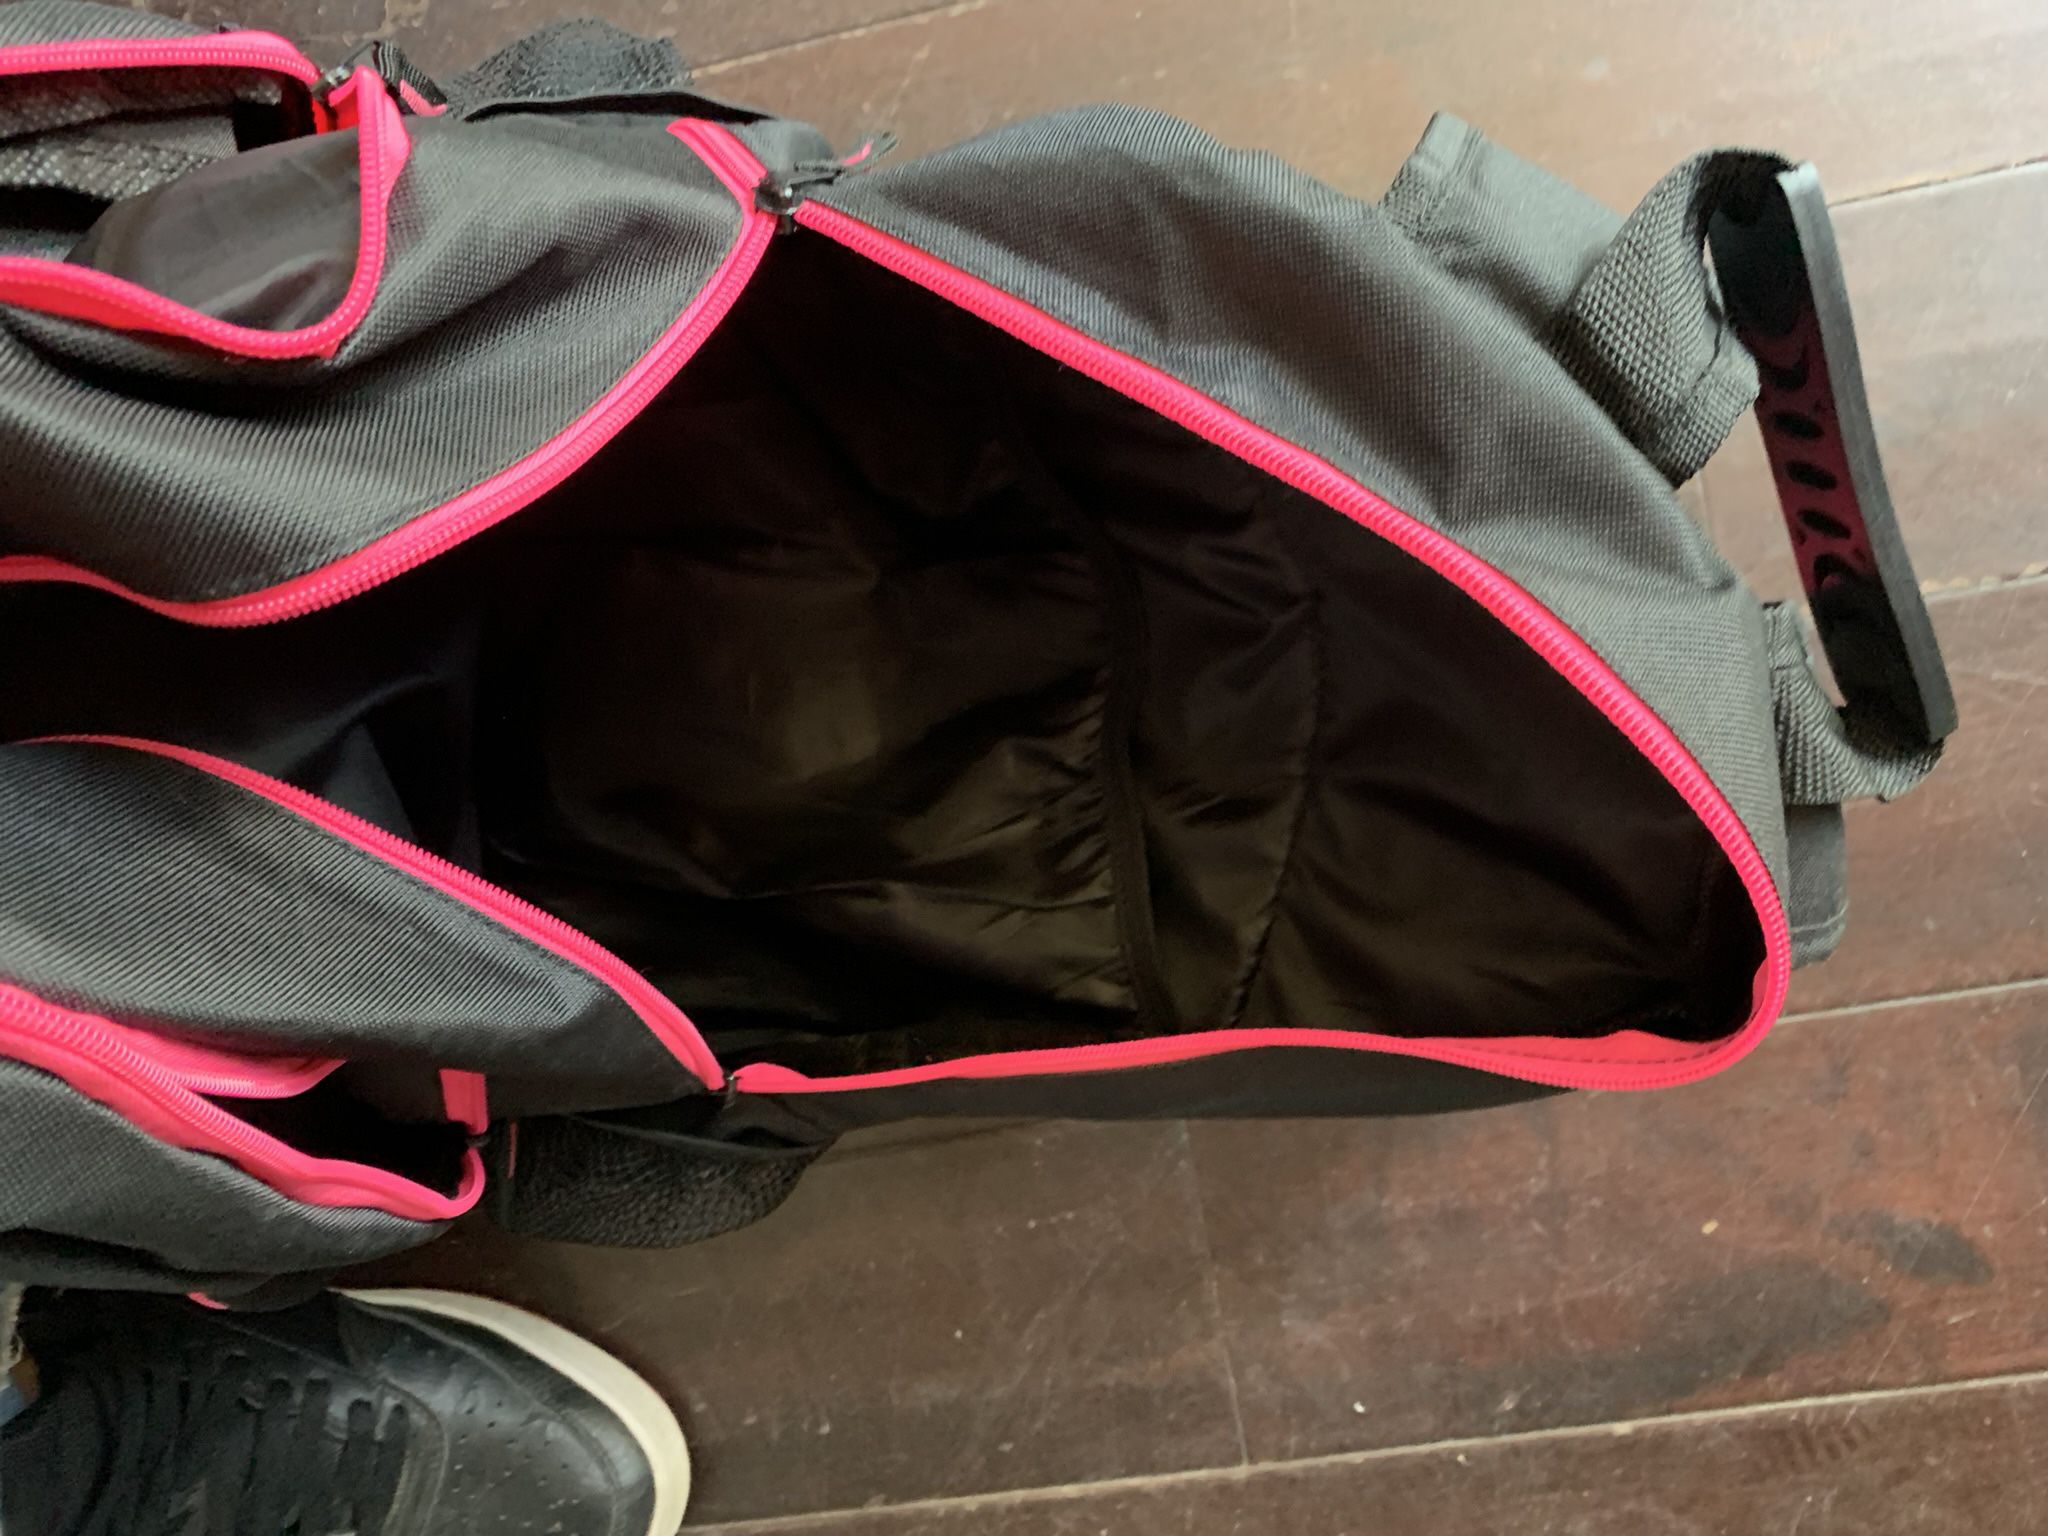 la angels baseball black/pink backpack